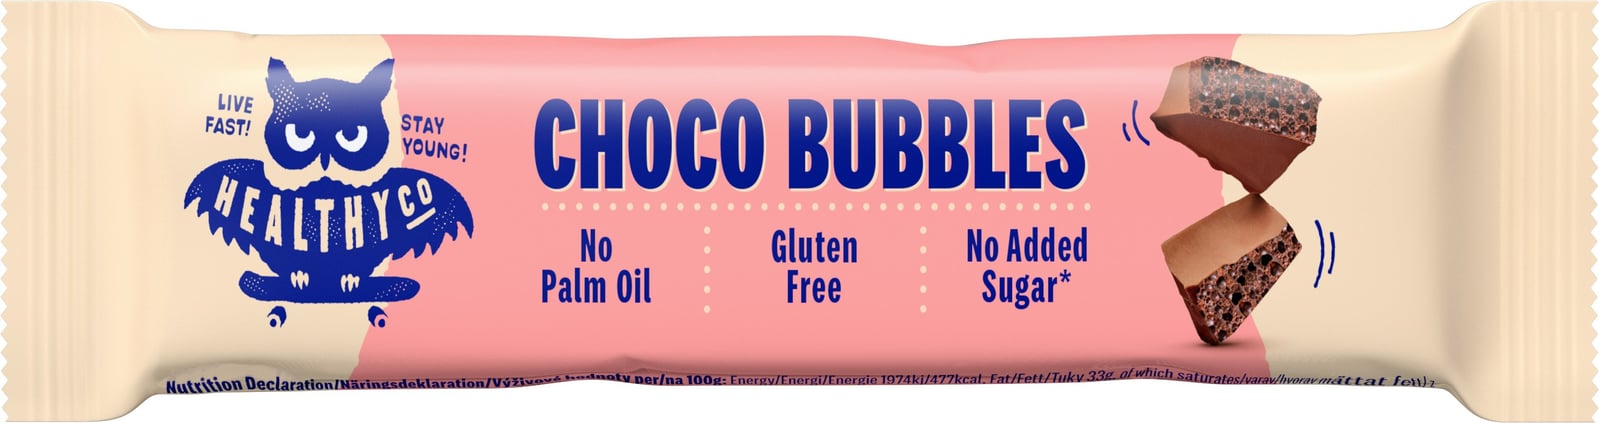 HealthyCo Choco Bubbles Milk Chocolate Bar 30g